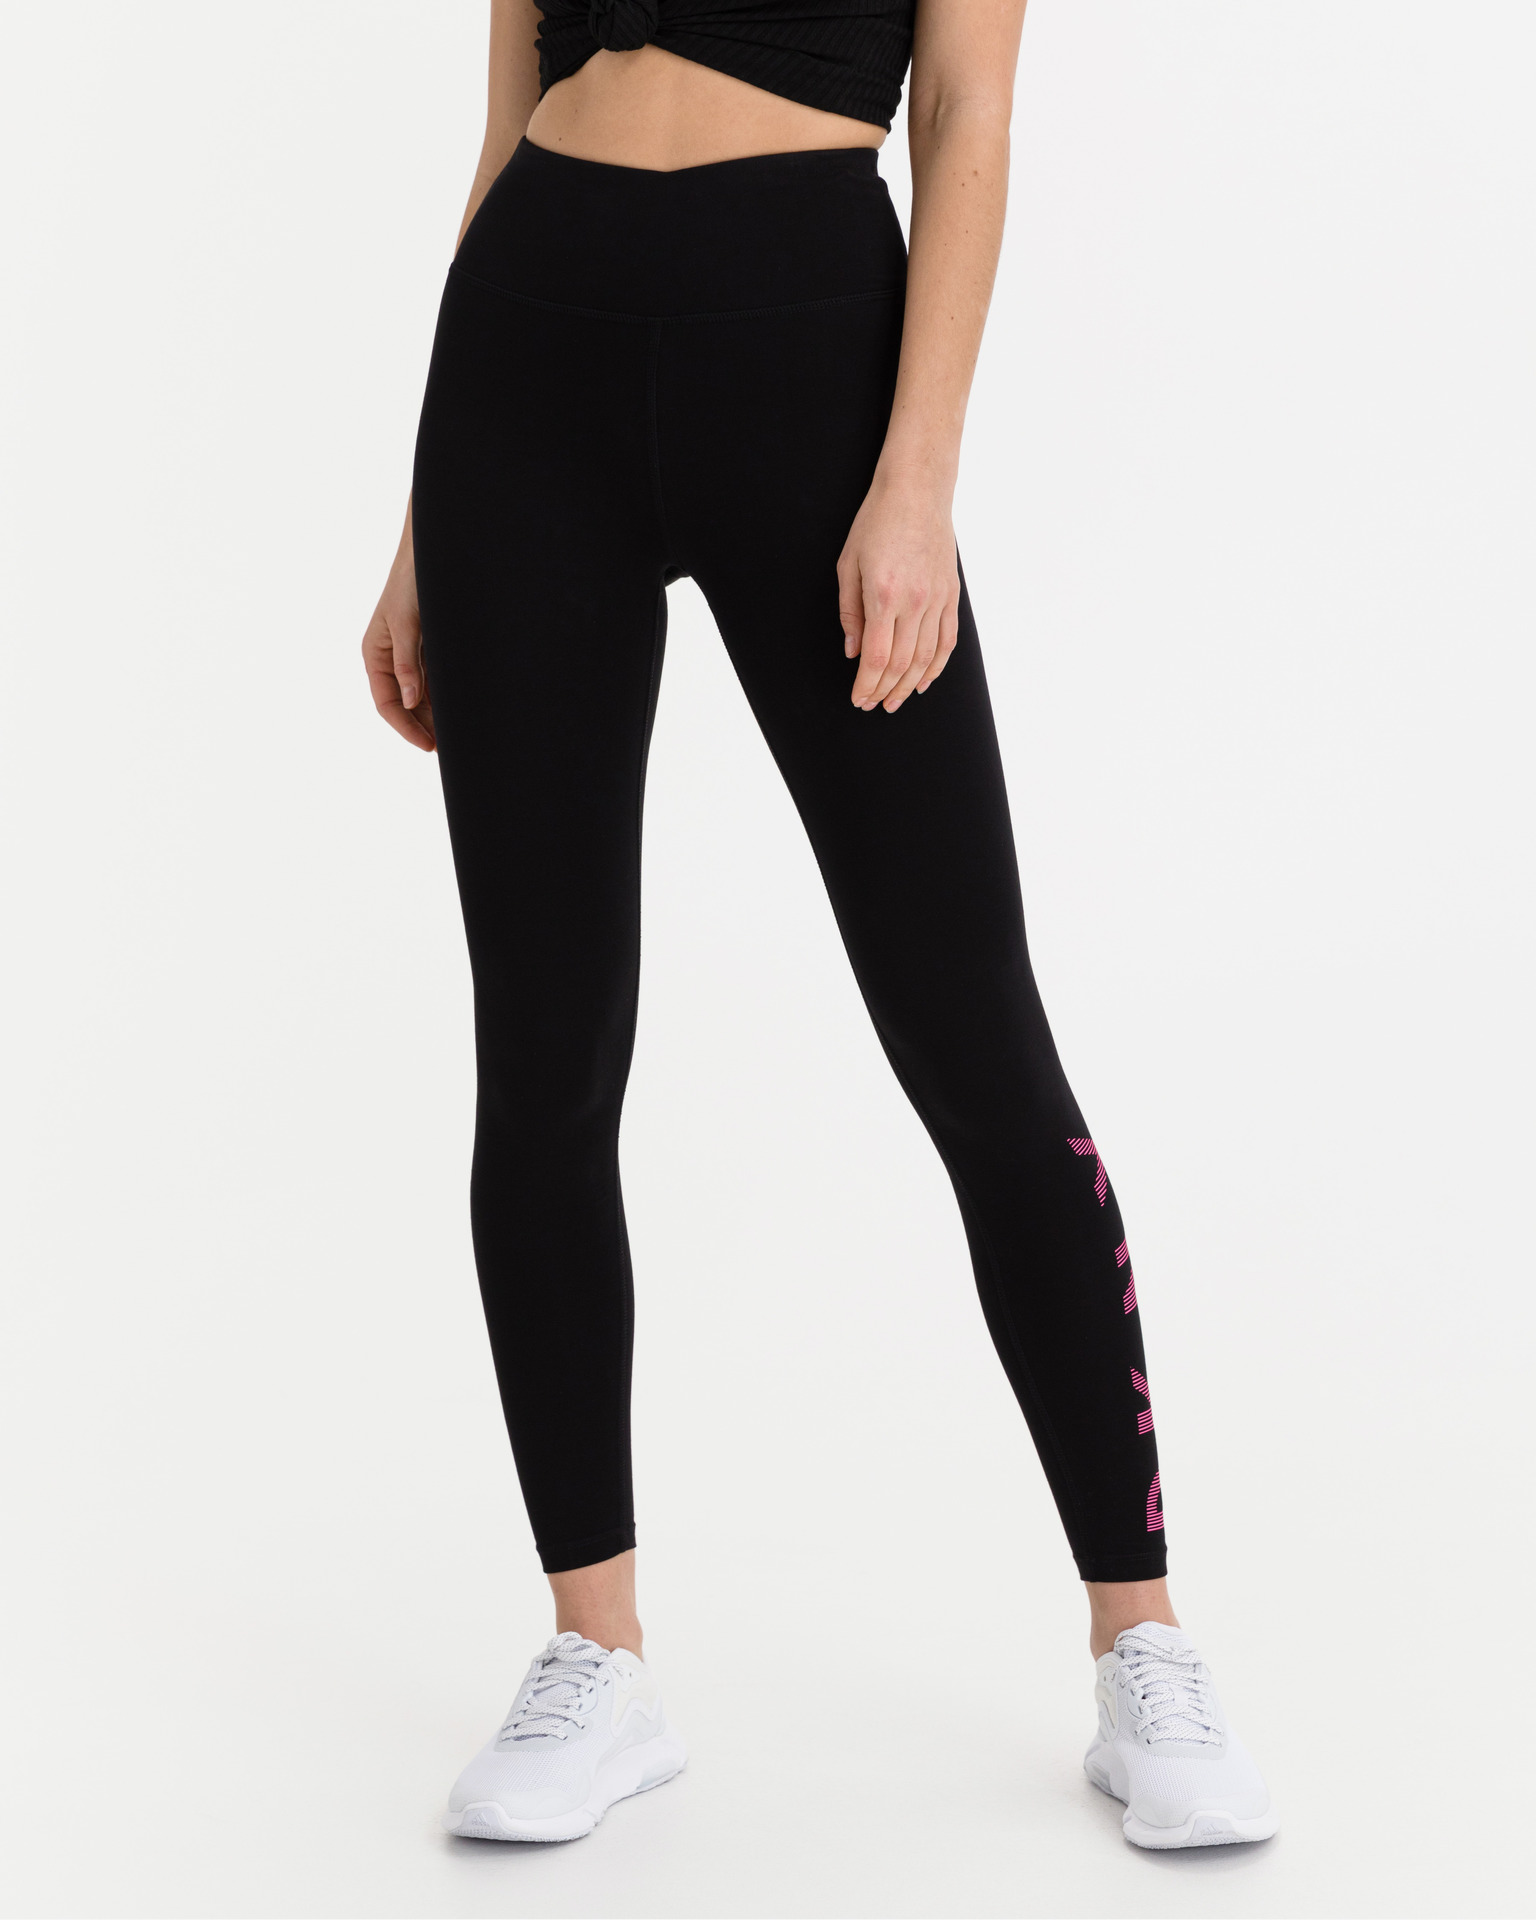 DKNY Sport Women's High Waist Side Pocket Tights / Leggings